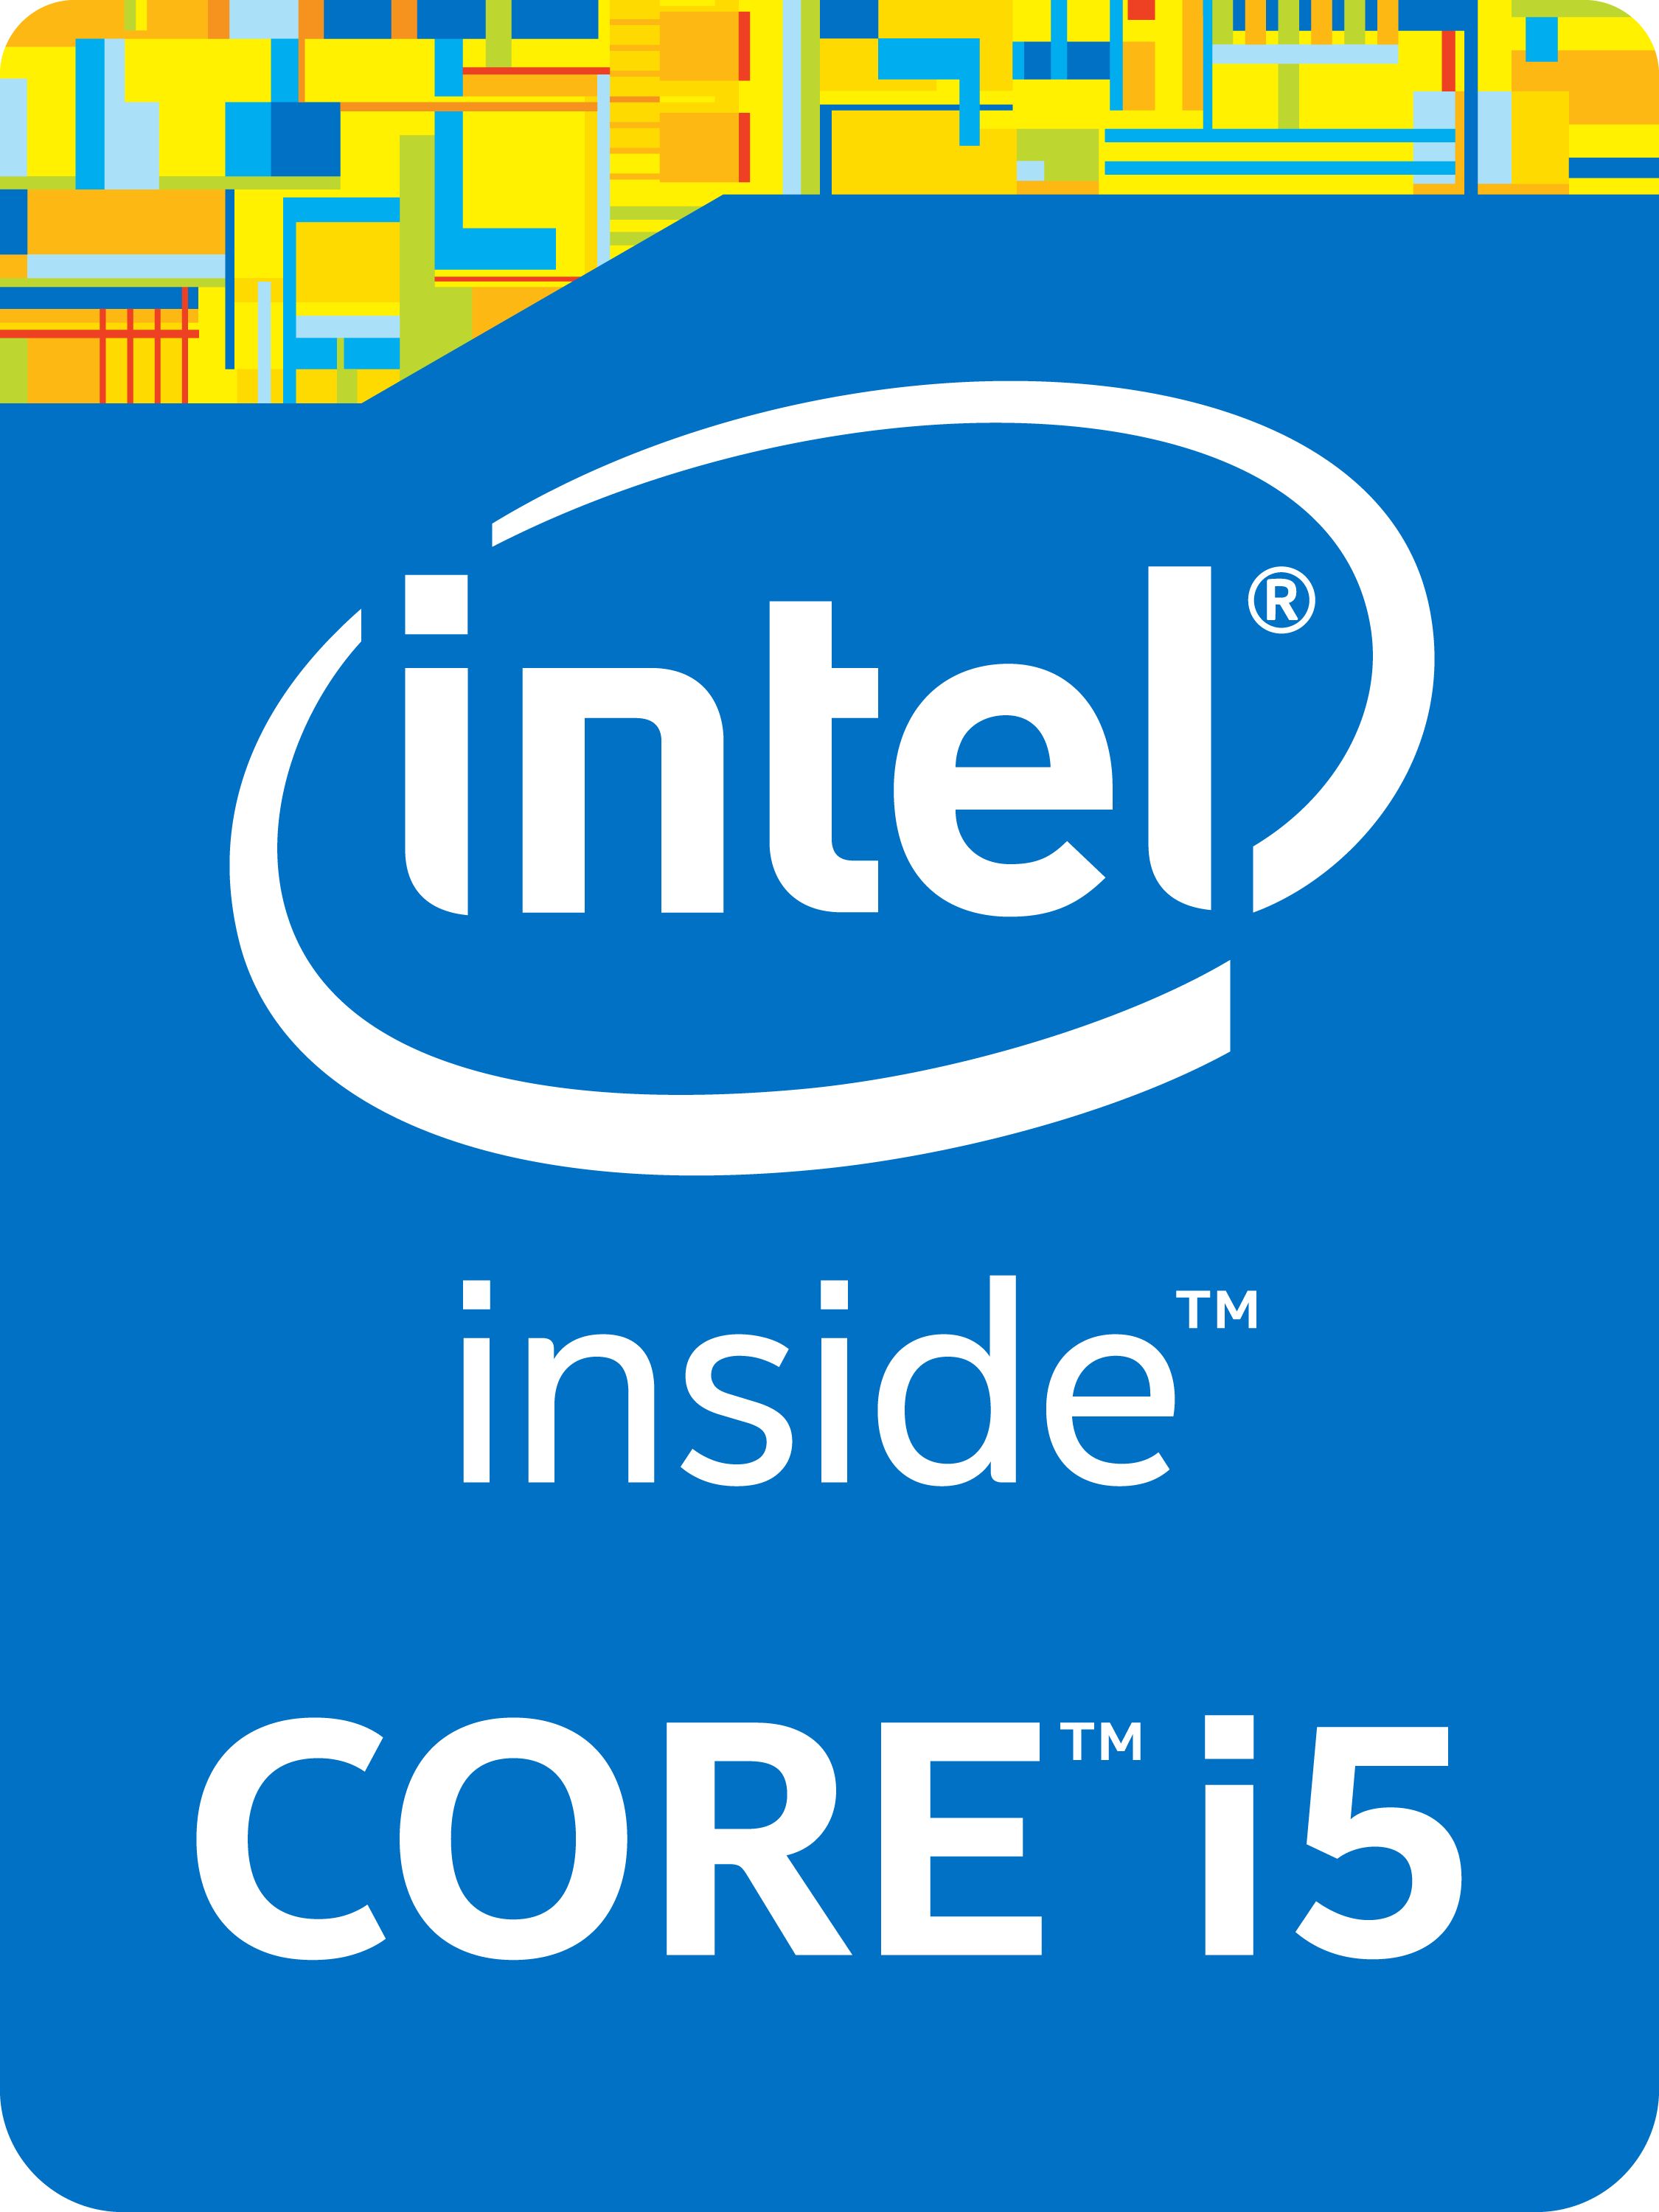 Intel Haswell 4th Generation Core i5 Processors